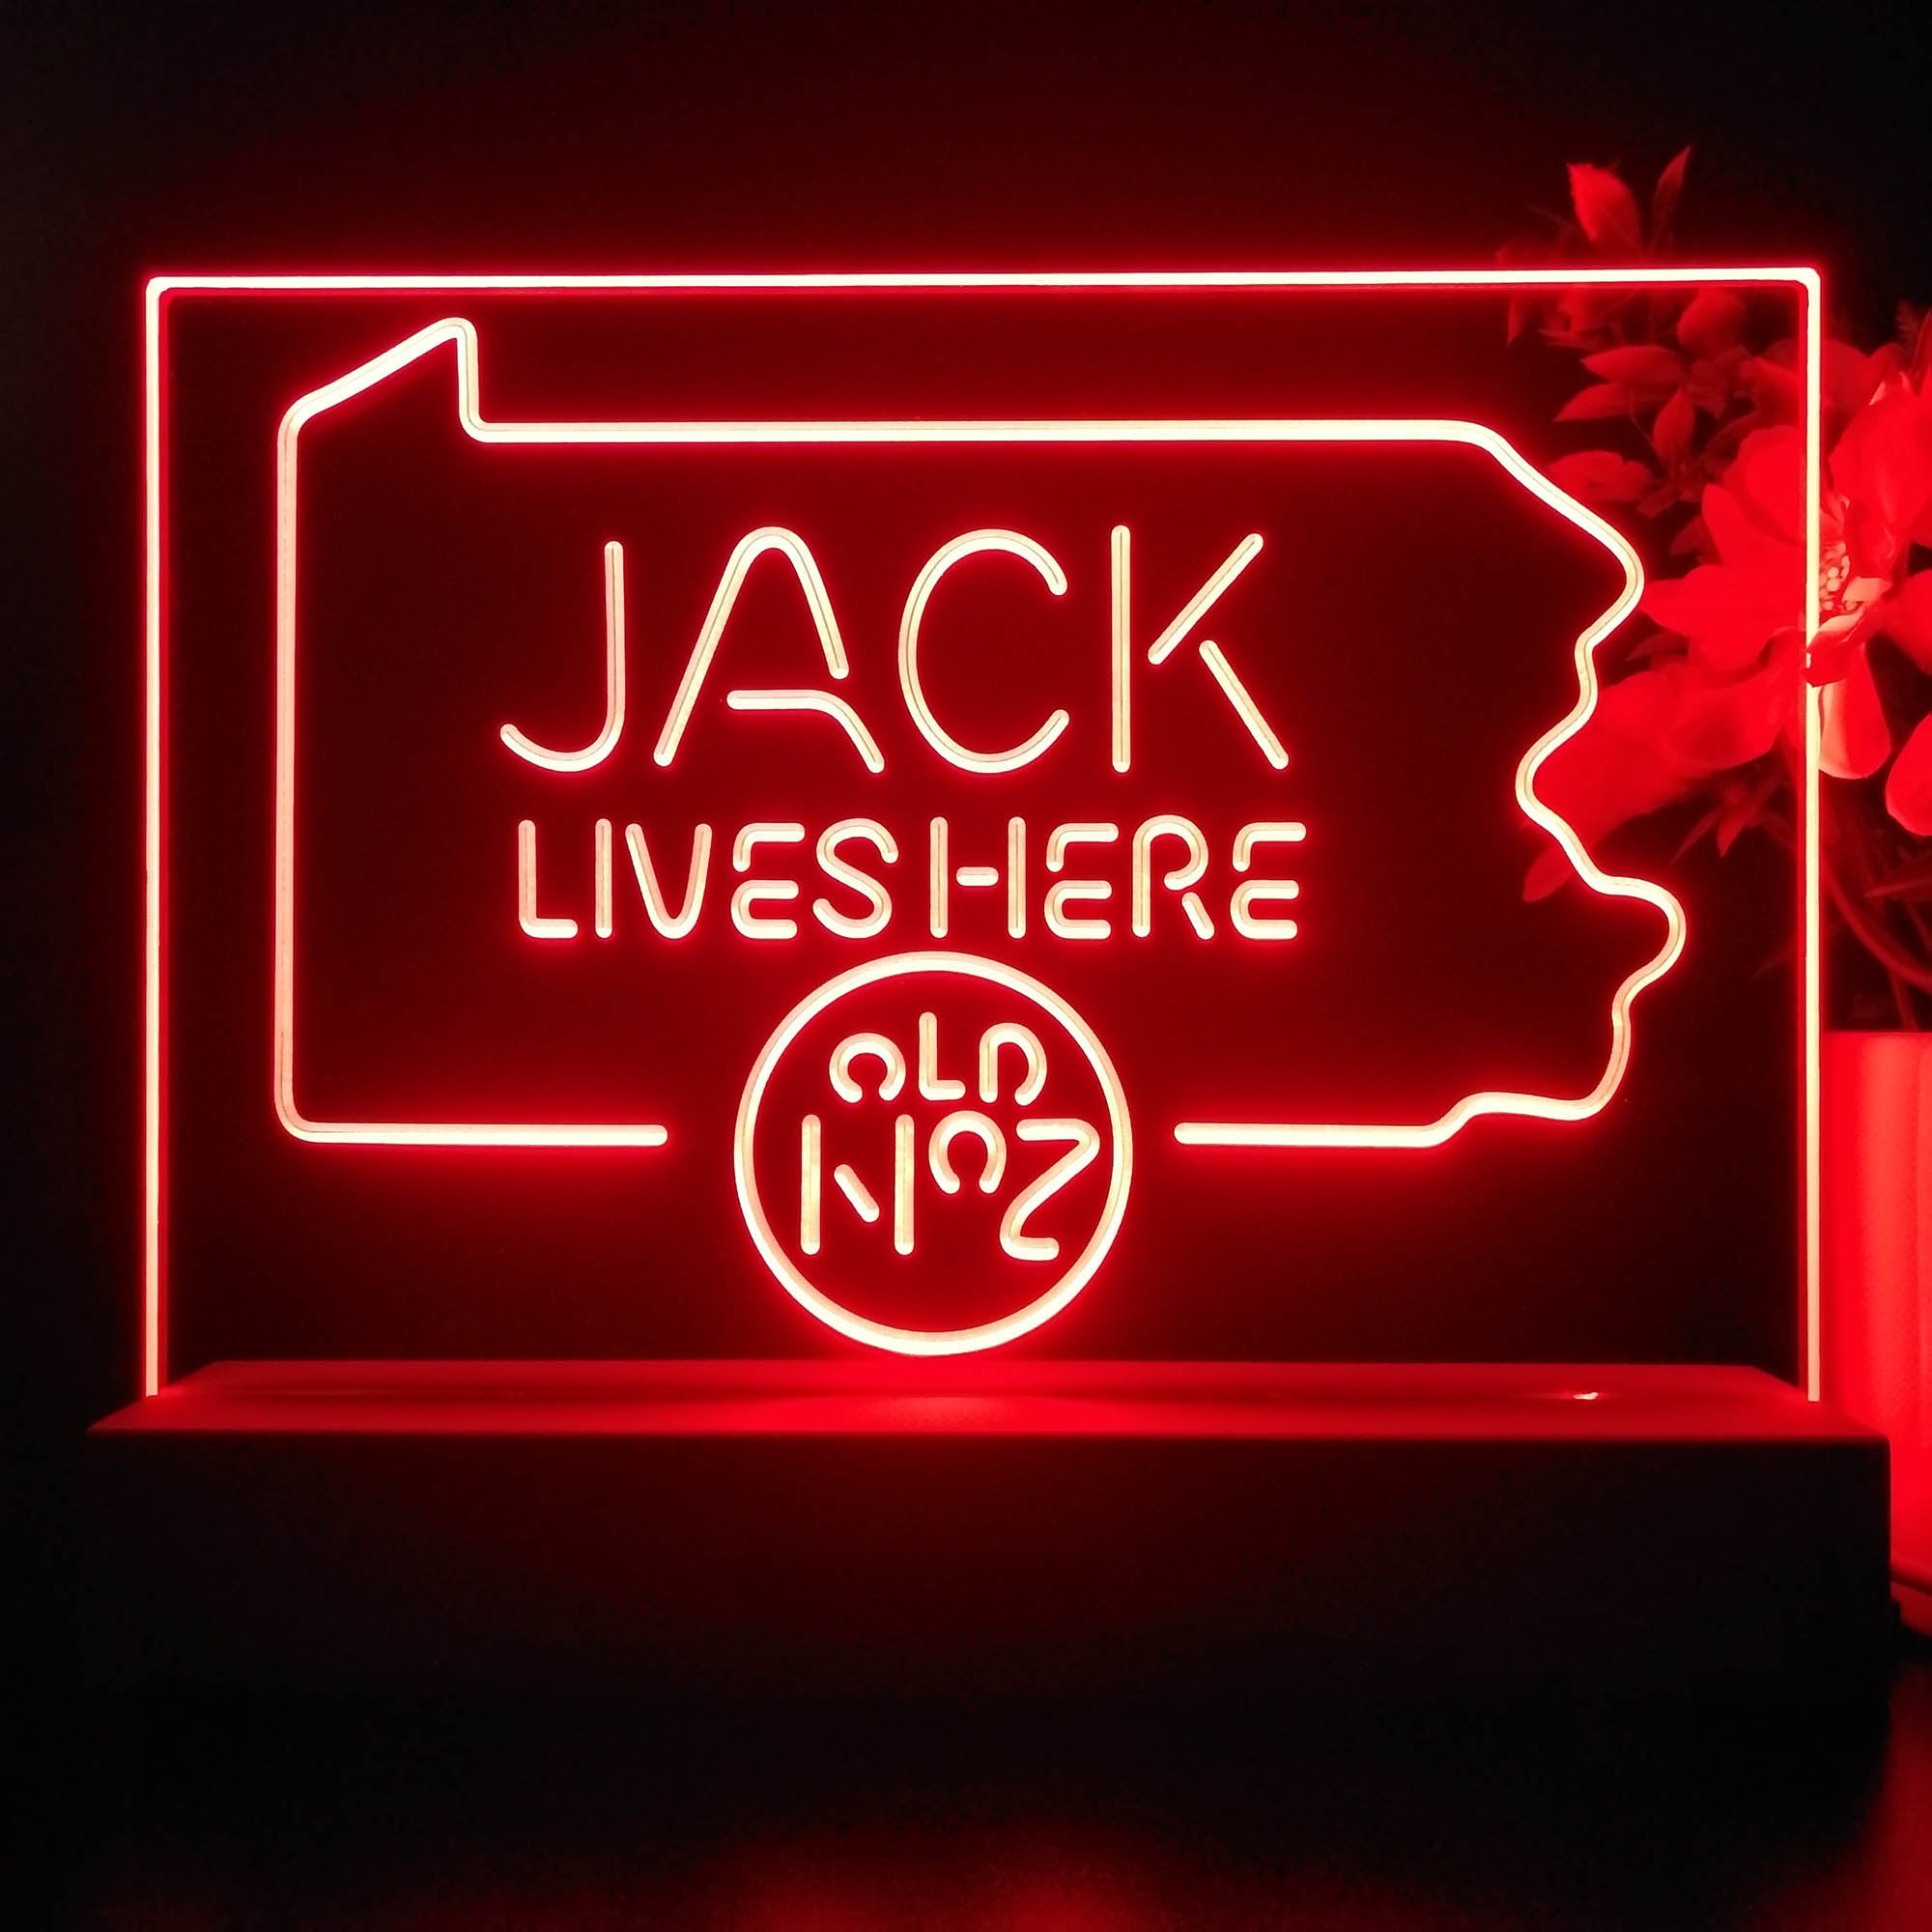 Pennsylvania Jack Lives Here Neon Sign Pub Bar Lamp